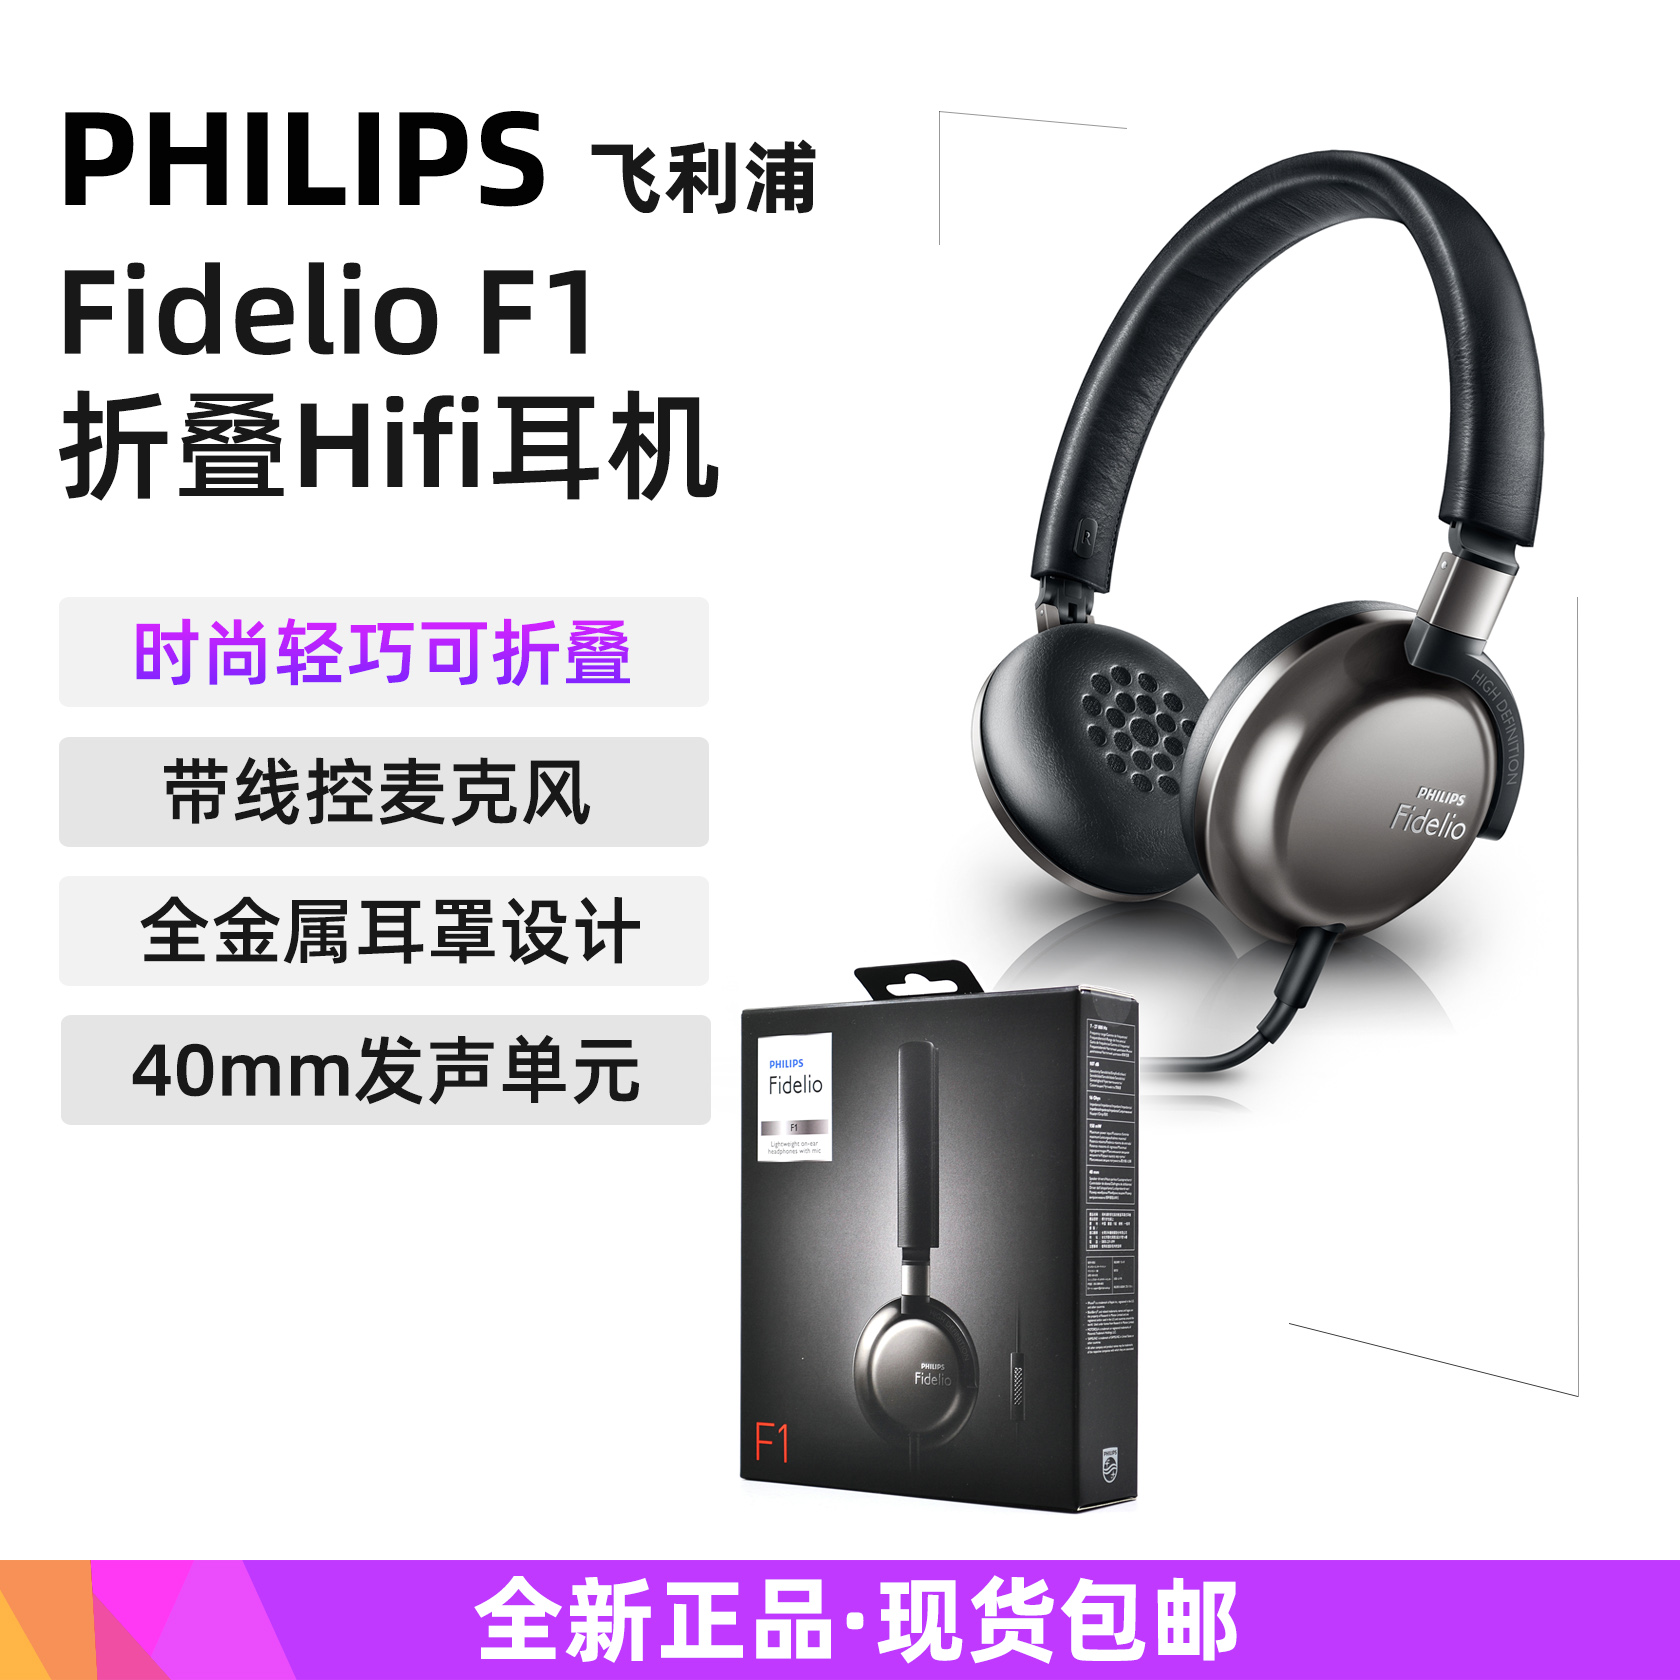 Philips/飞利浦Fidelio F1 头戴便携耳机带麦线控通话hi